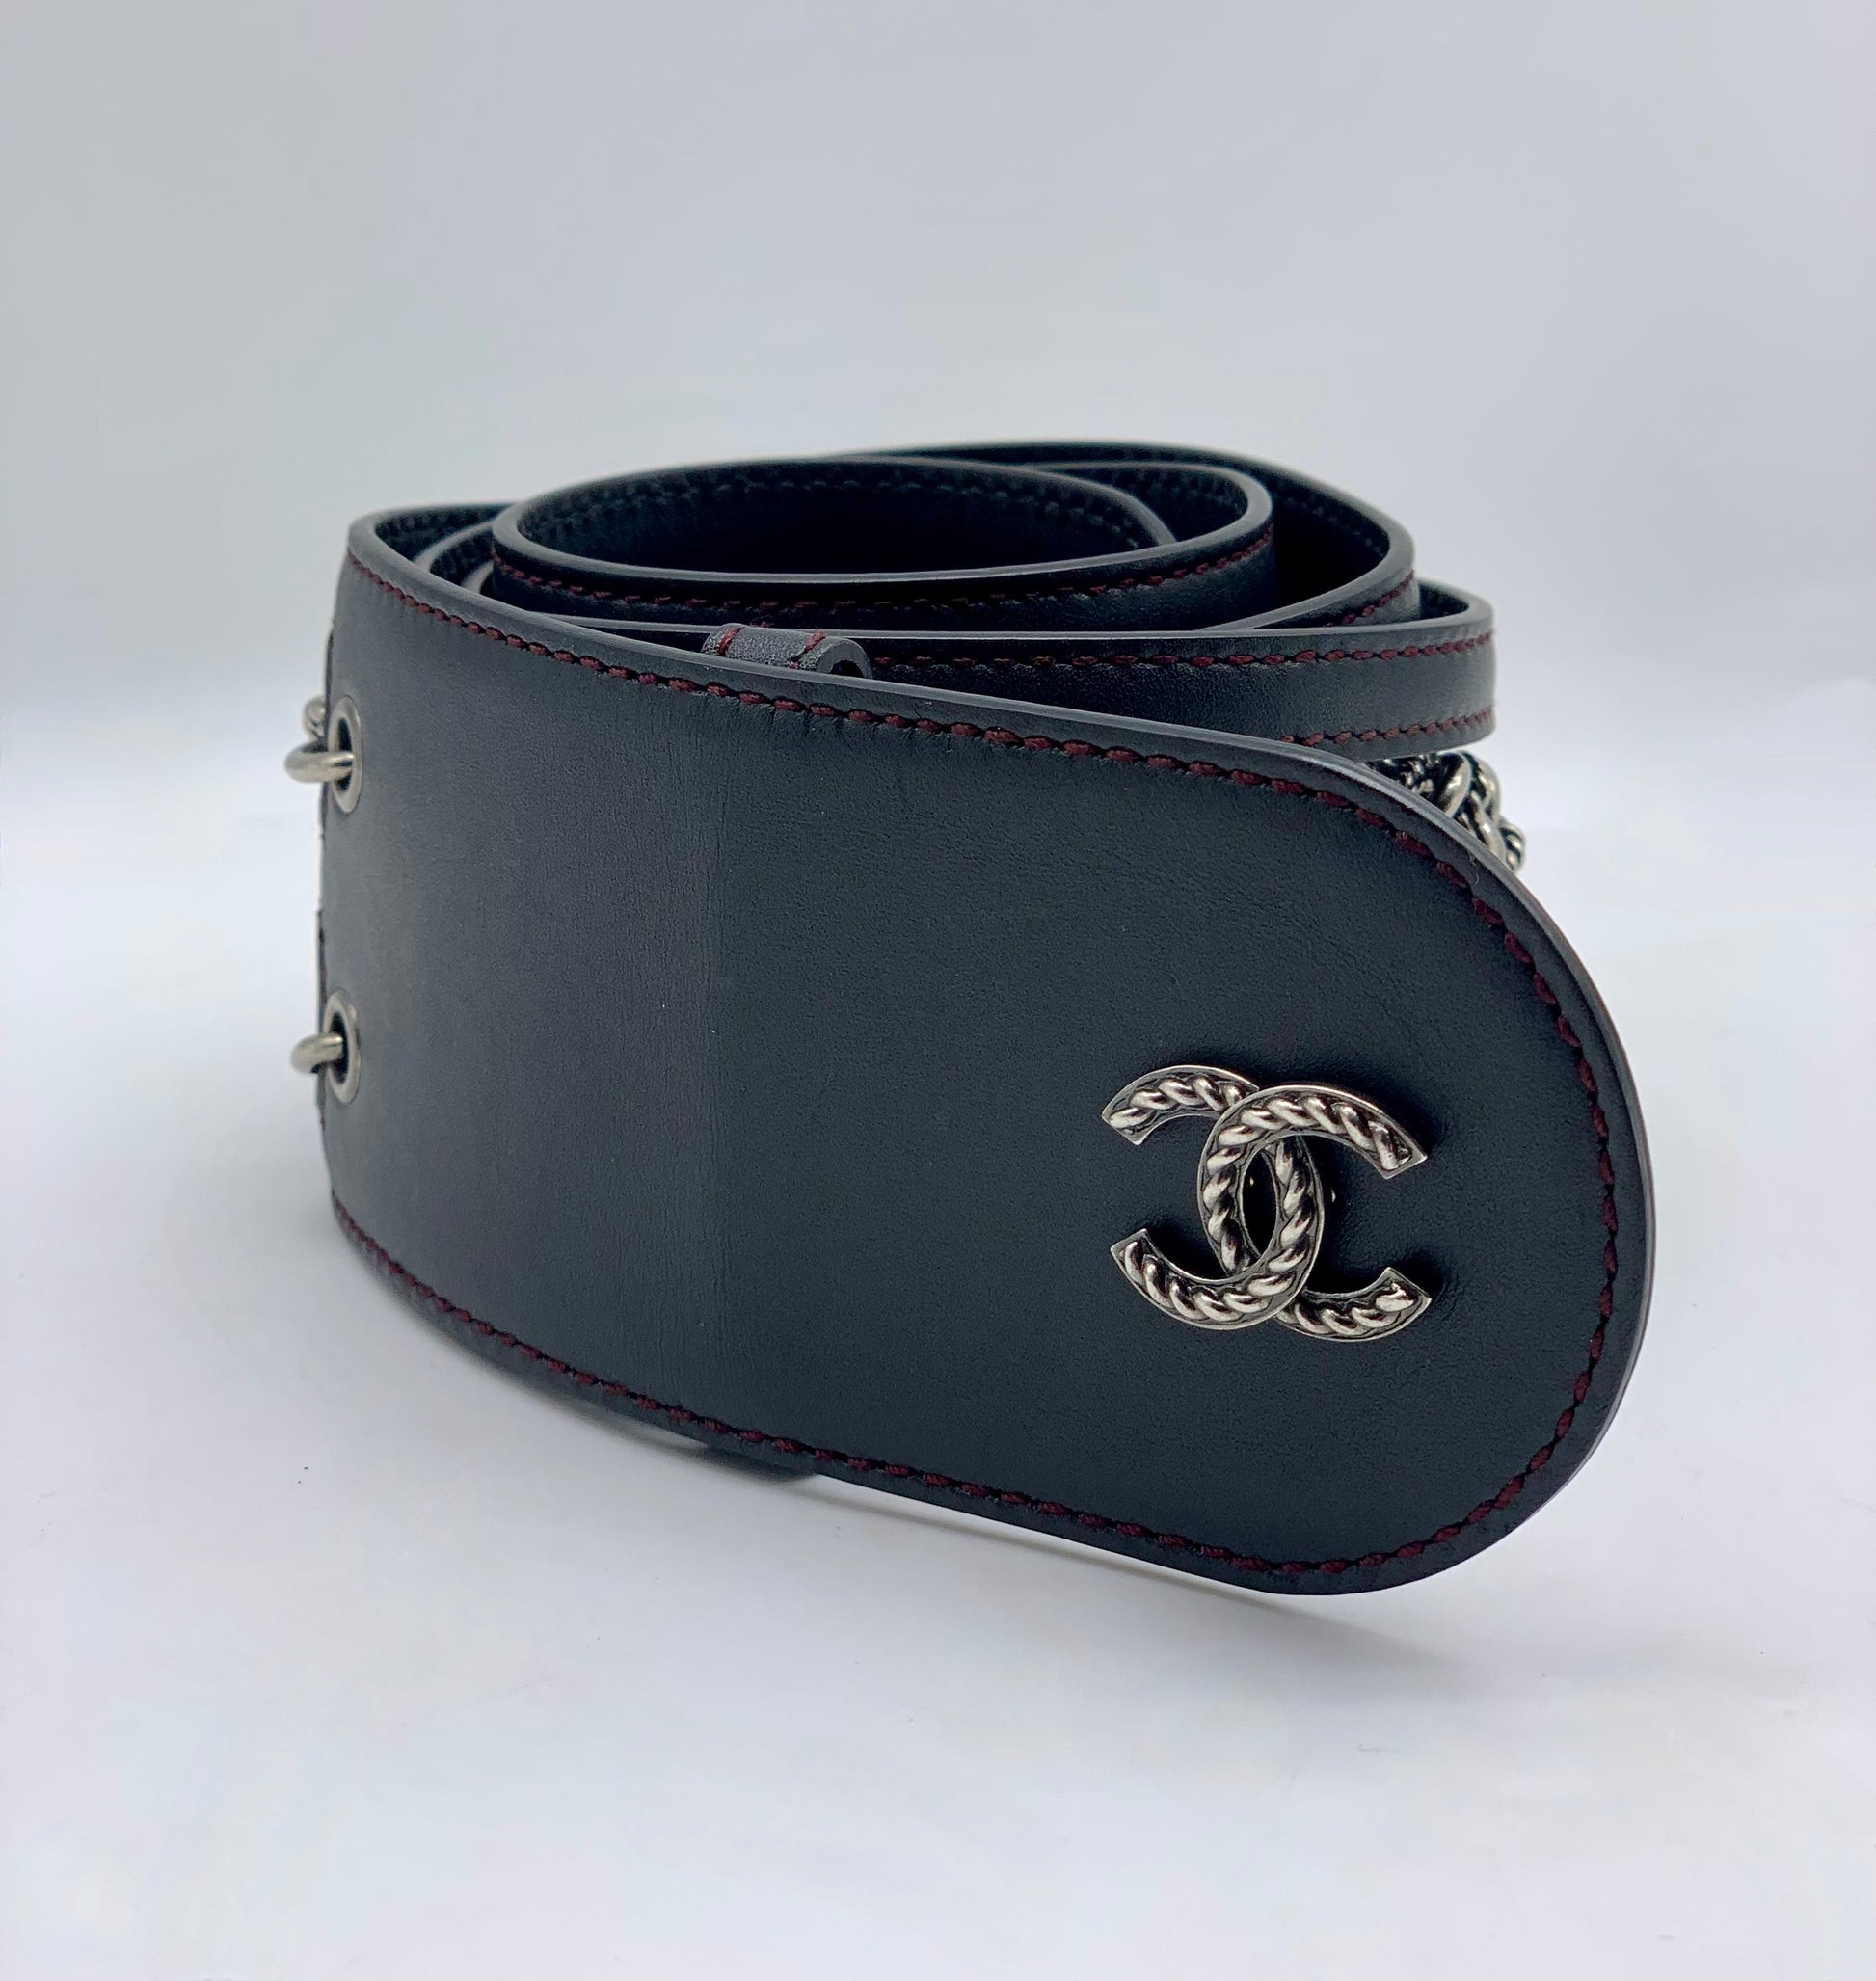 chanel black leather belt size